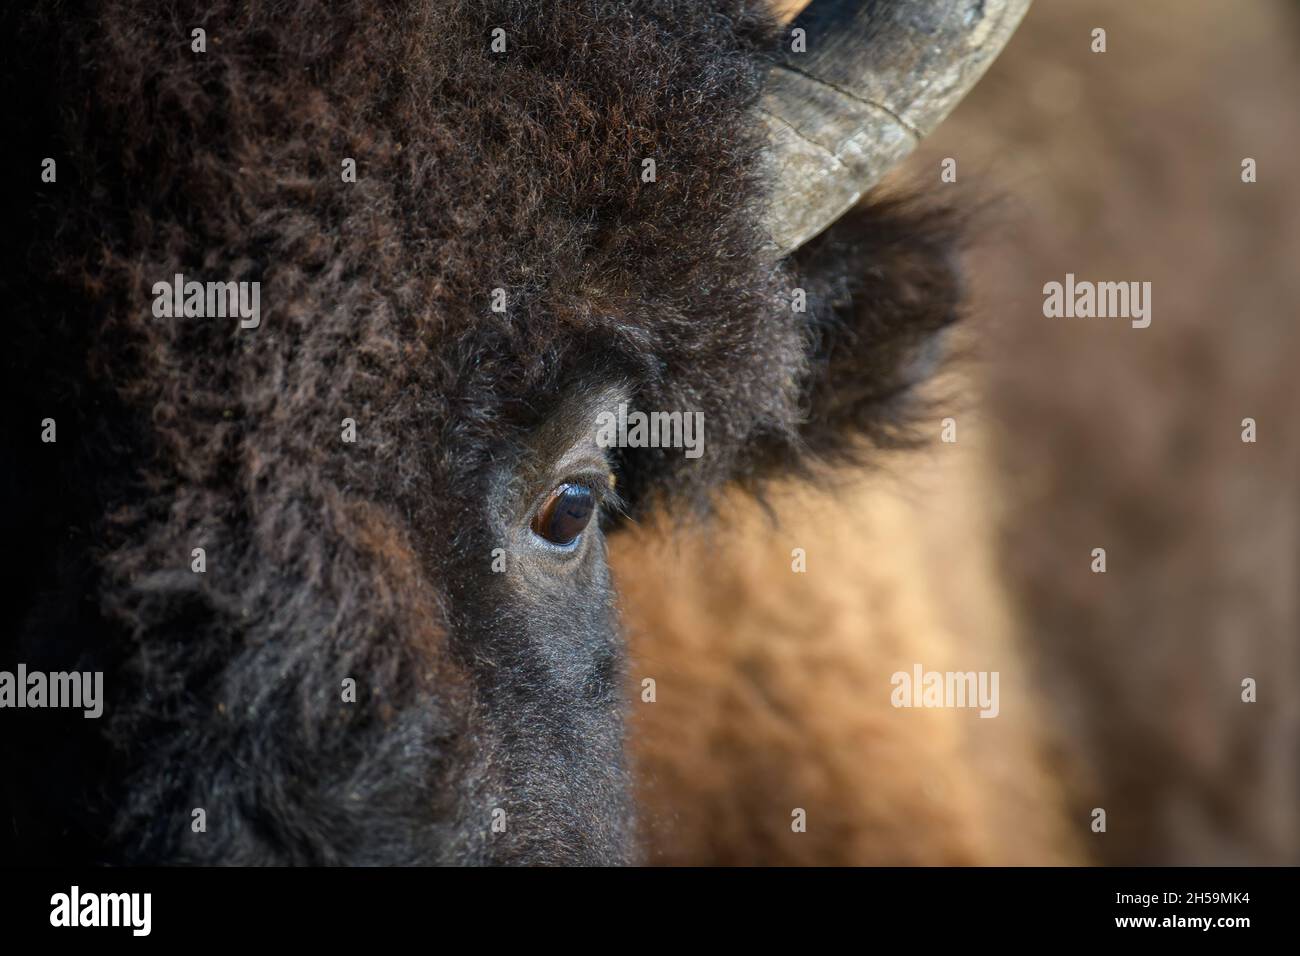 Gros plan du bison européen.Œil du grand animal brun dans l'habitat naturel Banque D'Images